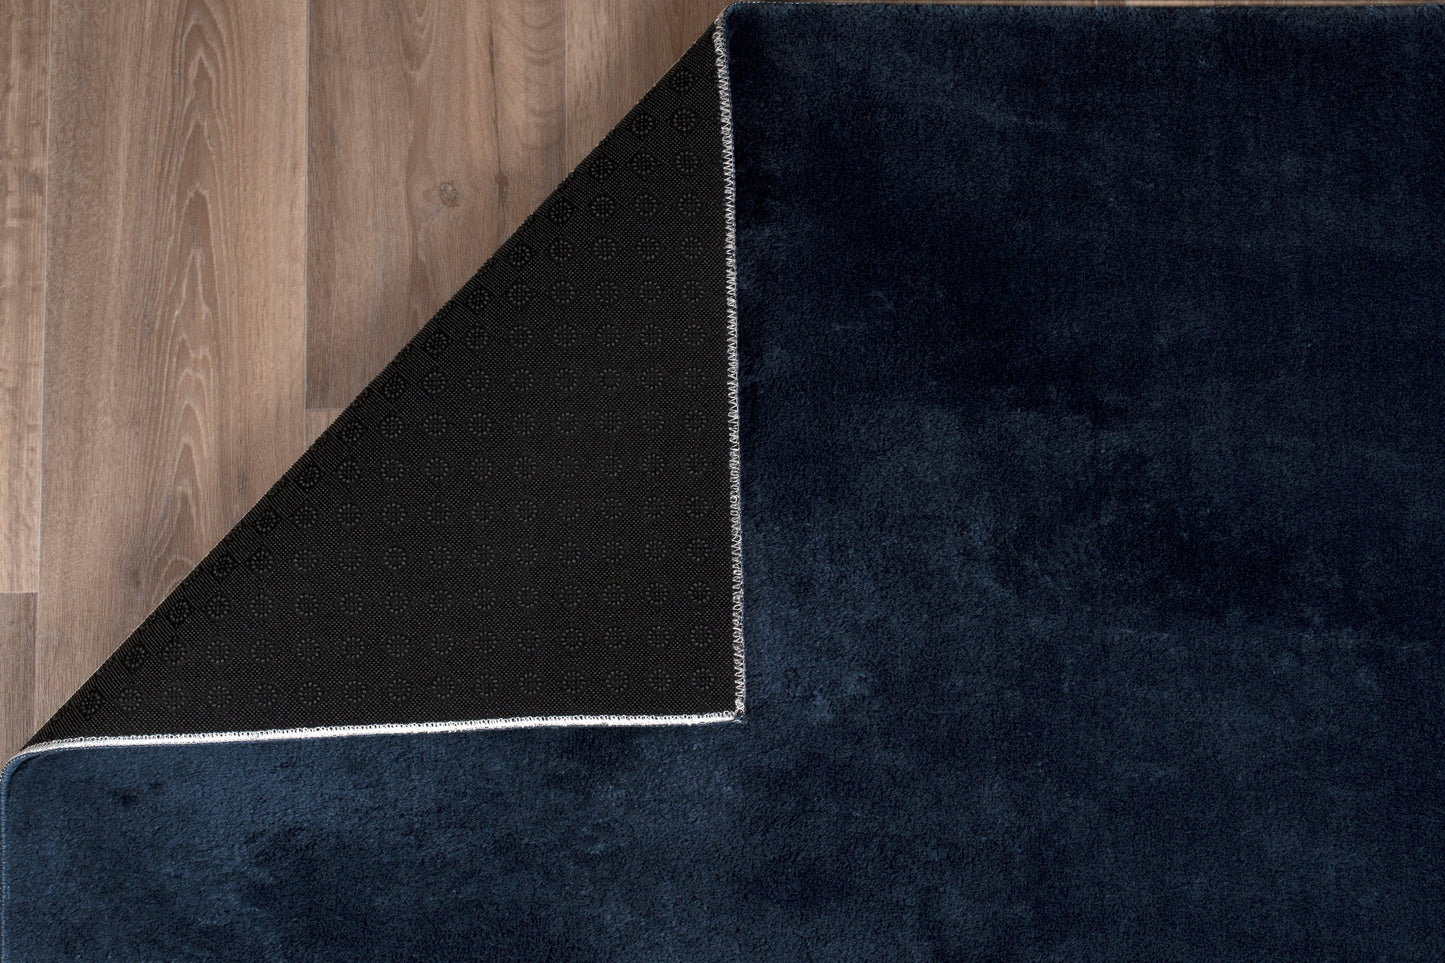 navy blue fluffy soft machine washable area rug for living room bedroom 6x8, 6x9 ft Living Room, Bedroom, Dining Area, Kitchen Carpet